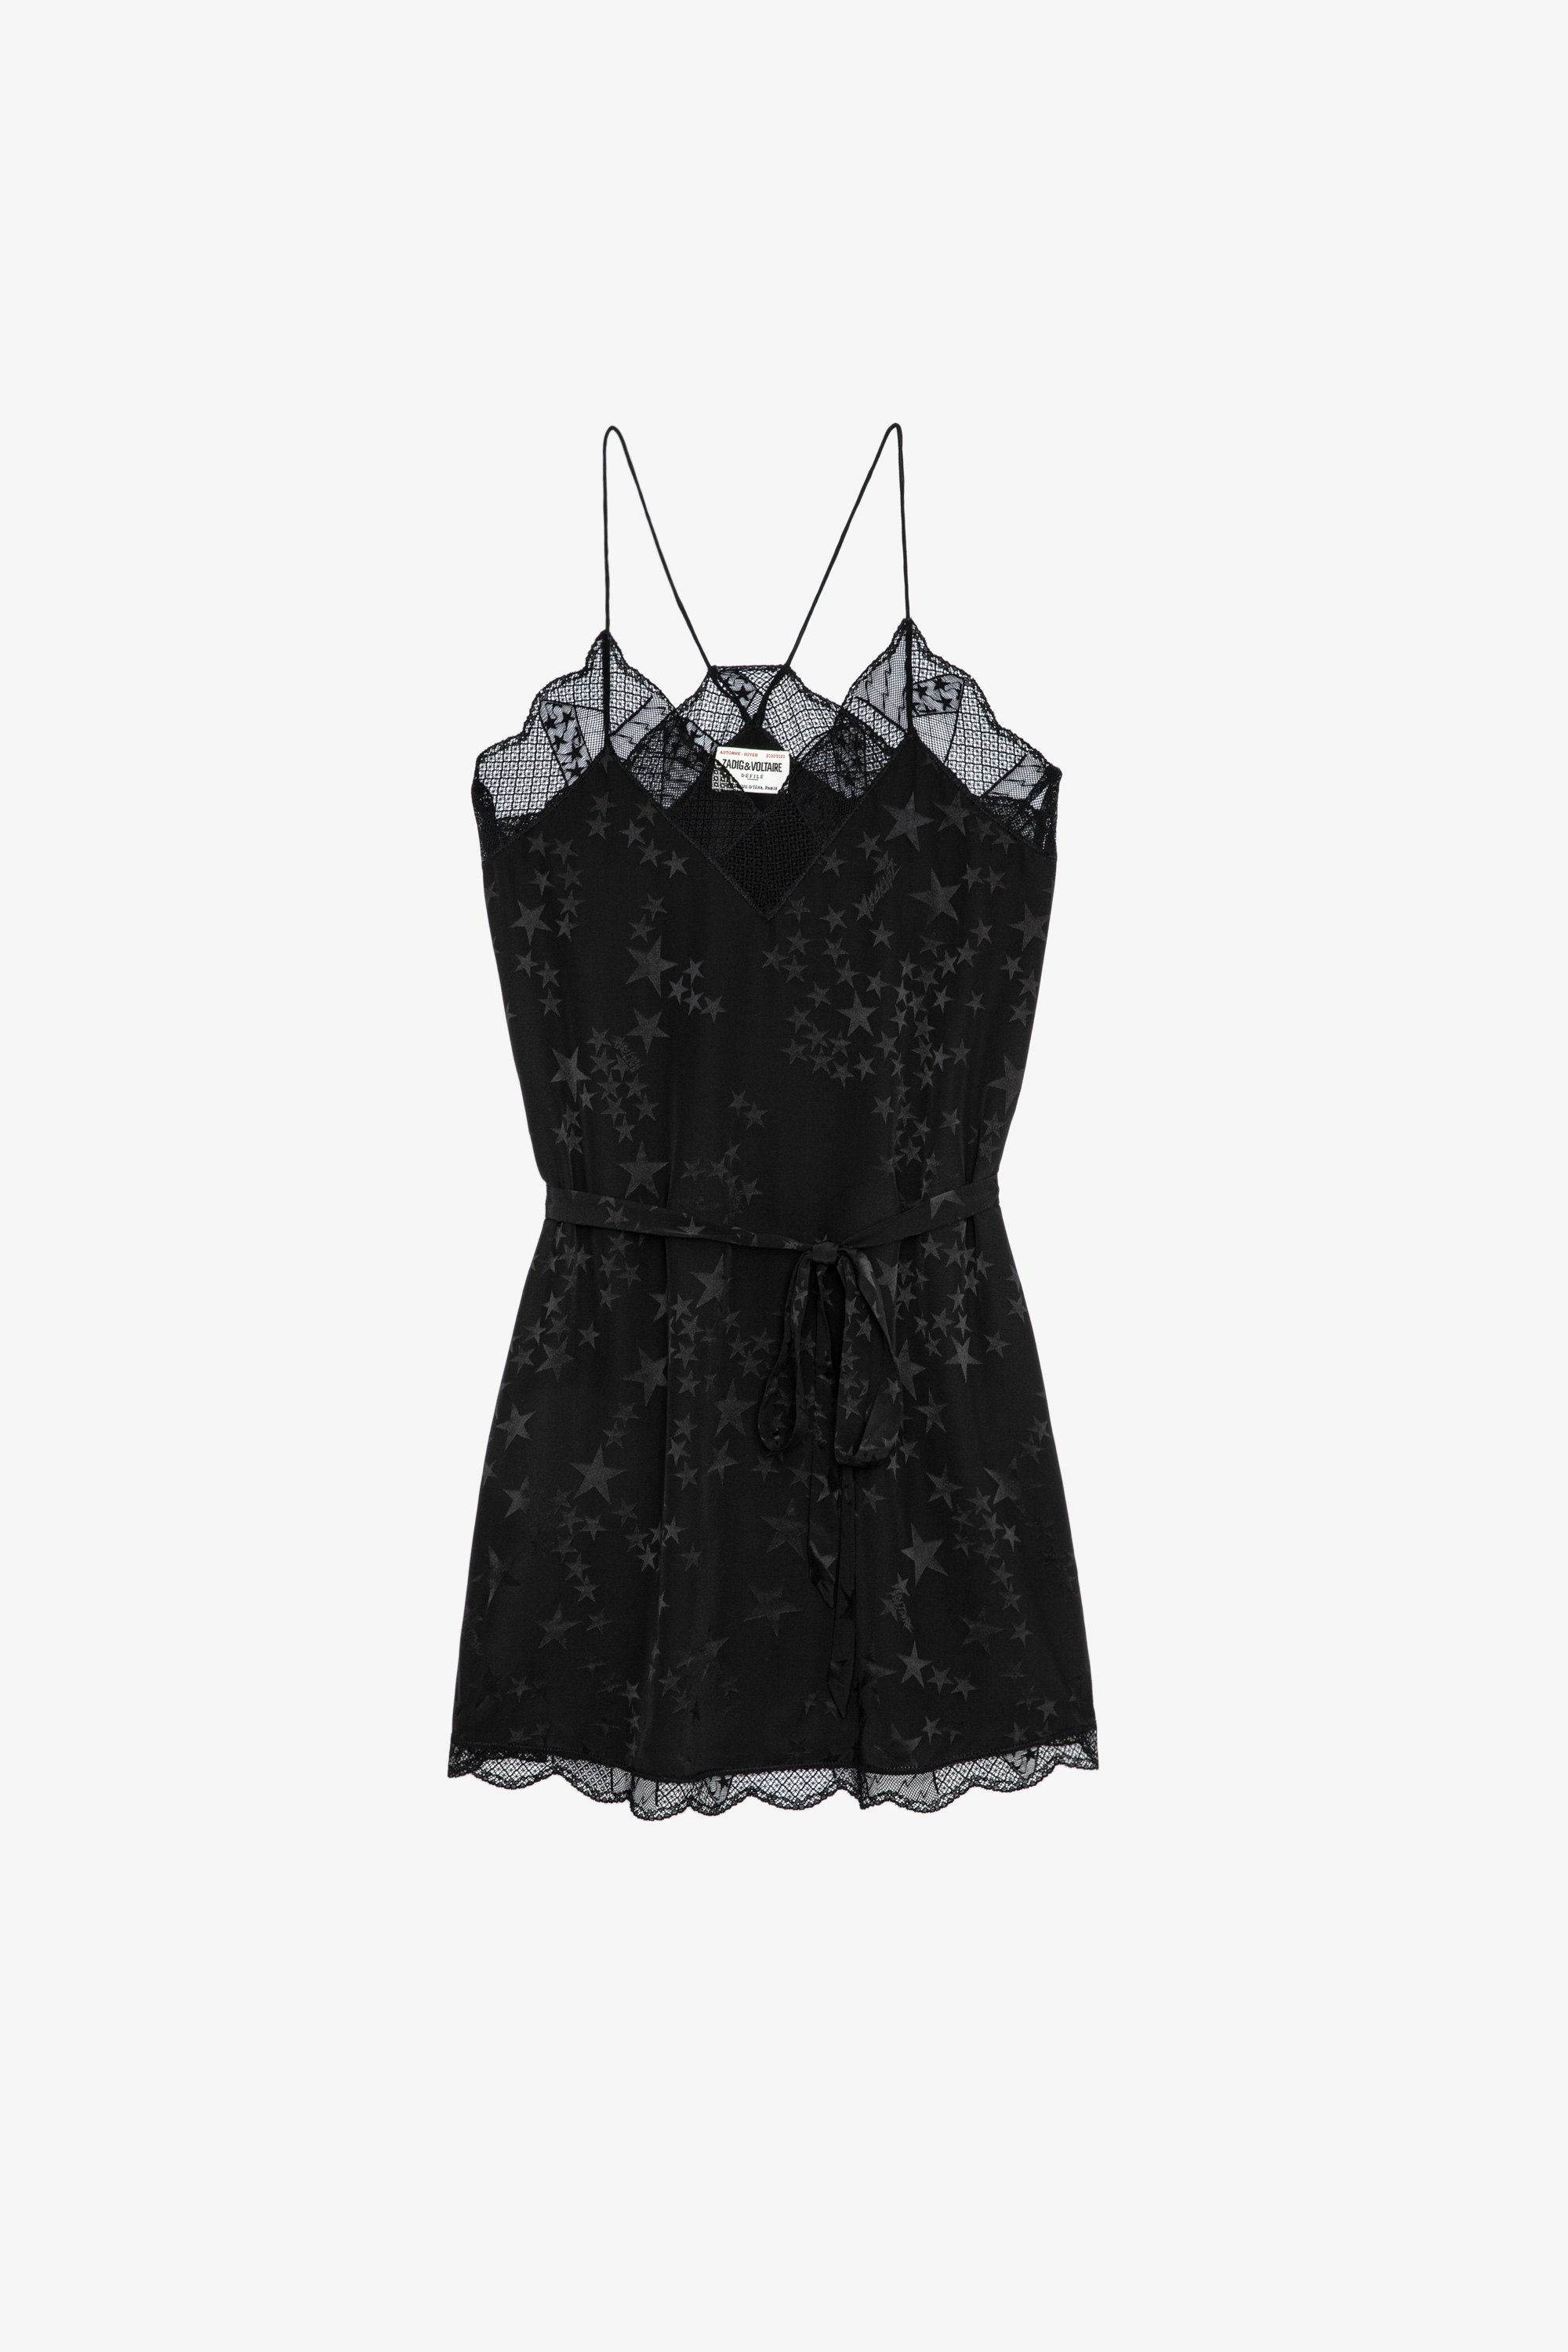 Ristyz Stars Silk Dress - Women’s star-studded black silk jacquard mini dress tied at the waist with lace trim